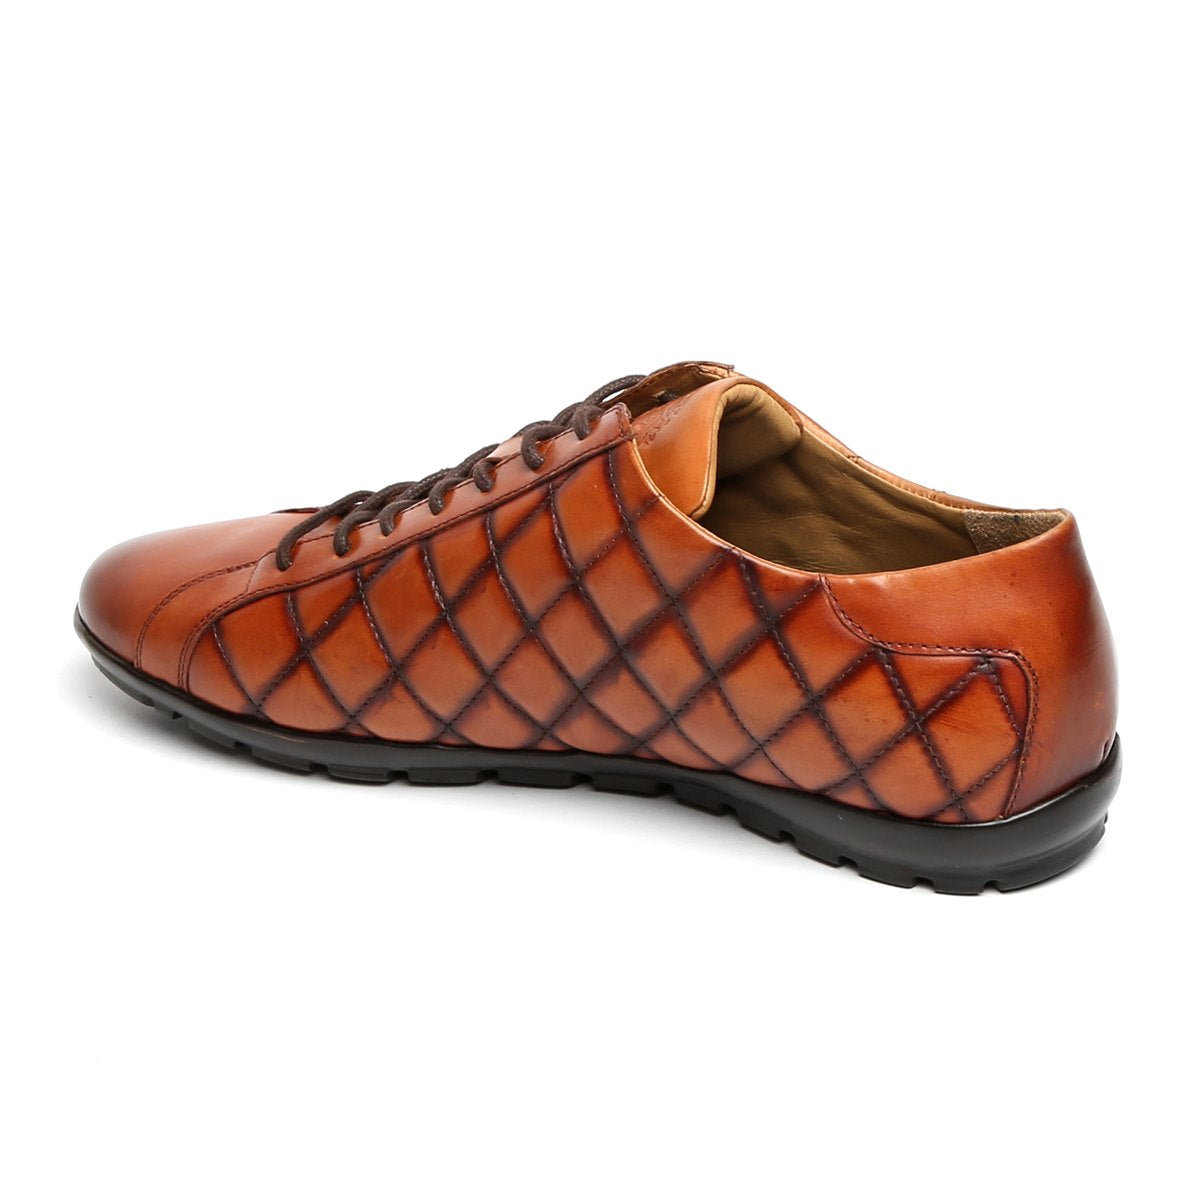 Gabicci - Rich Tan color leather sneaker - GOAL (RICH TAN) – Gabicci India